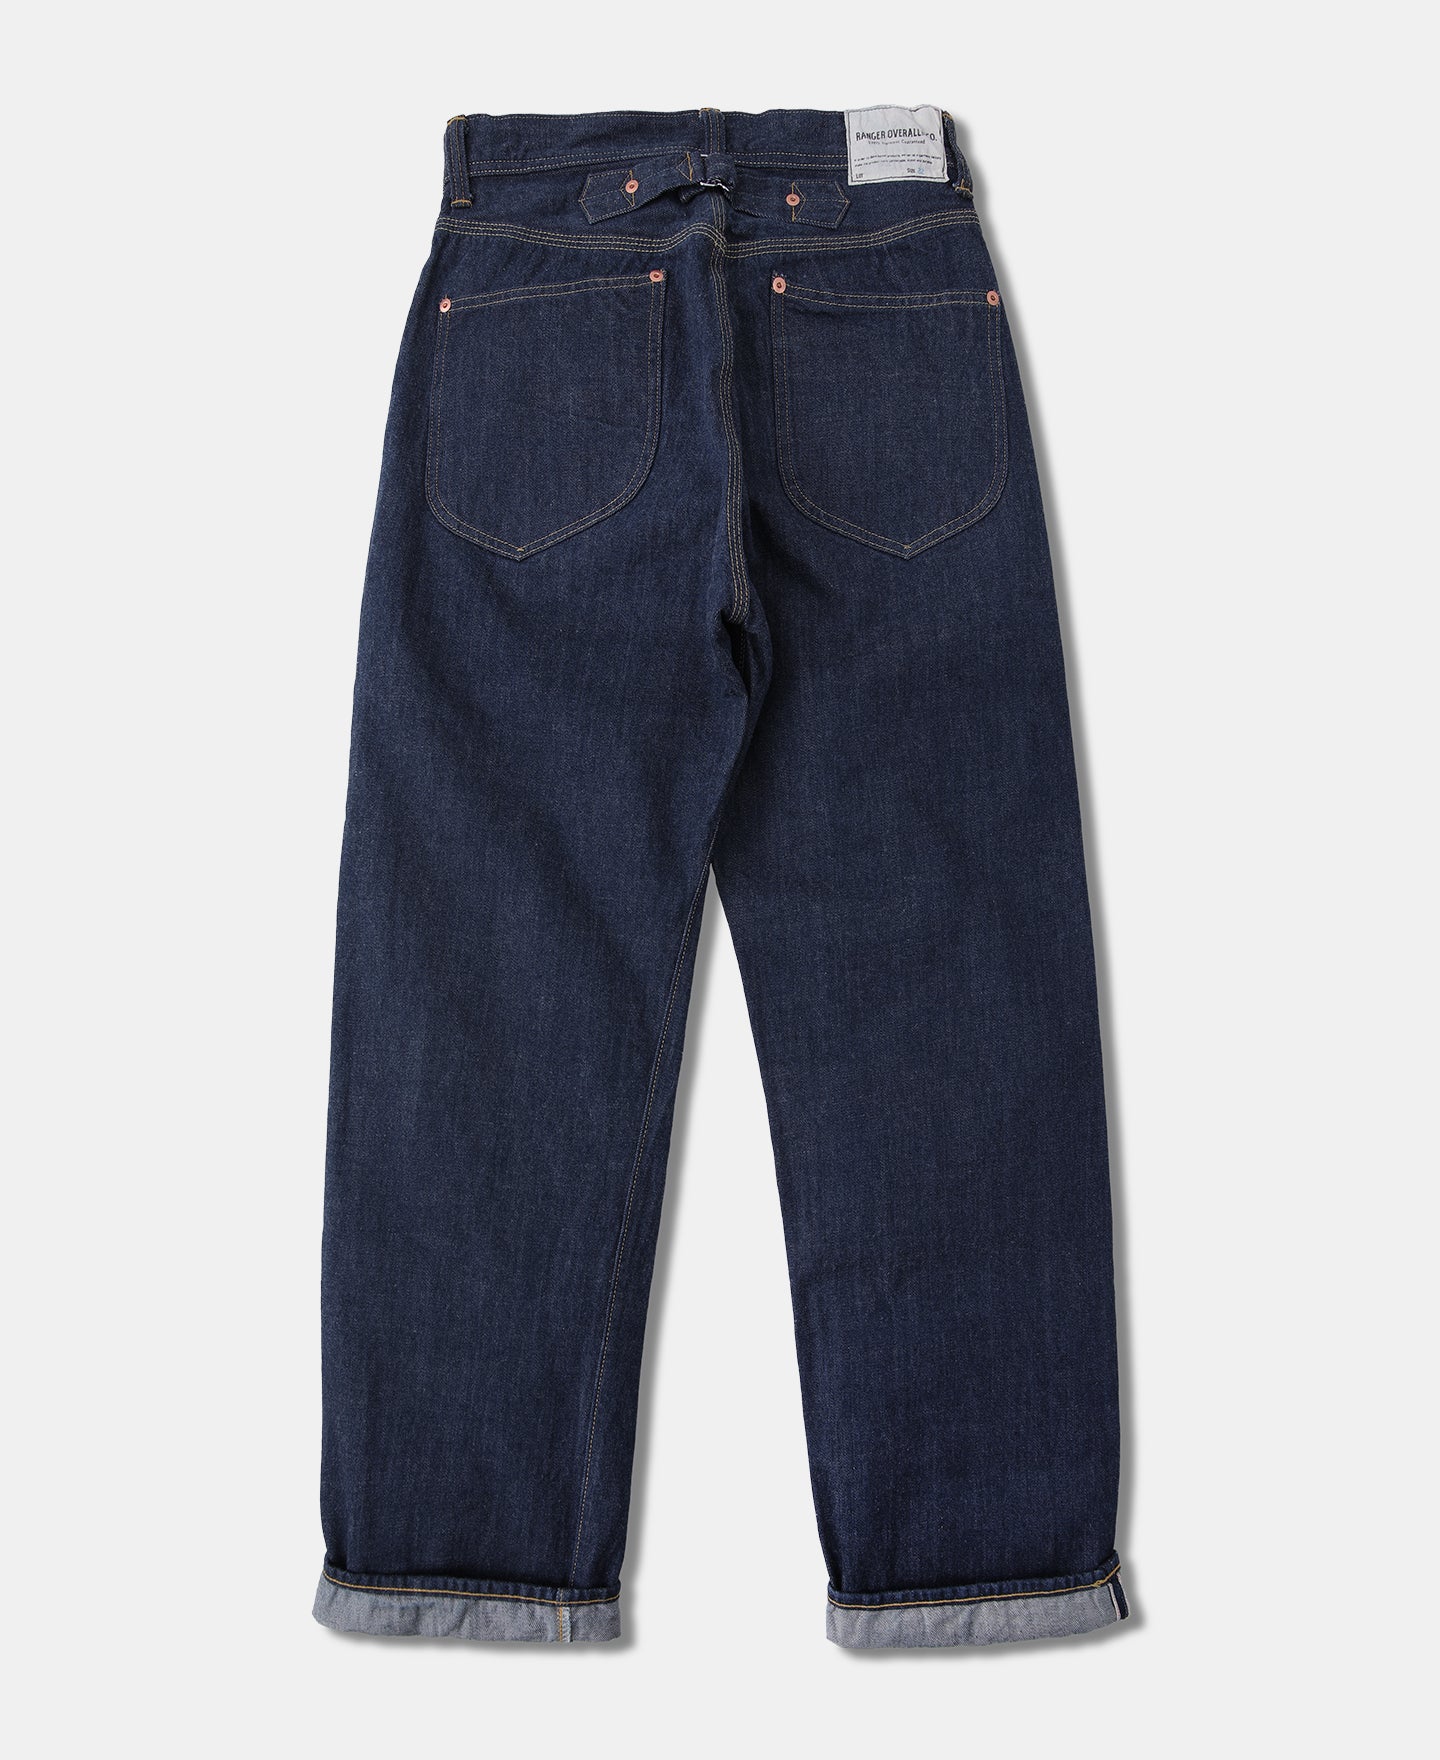 Mack Denim Basic Jeans at Rs 625/piece in Mumbai | ID: 16103089362